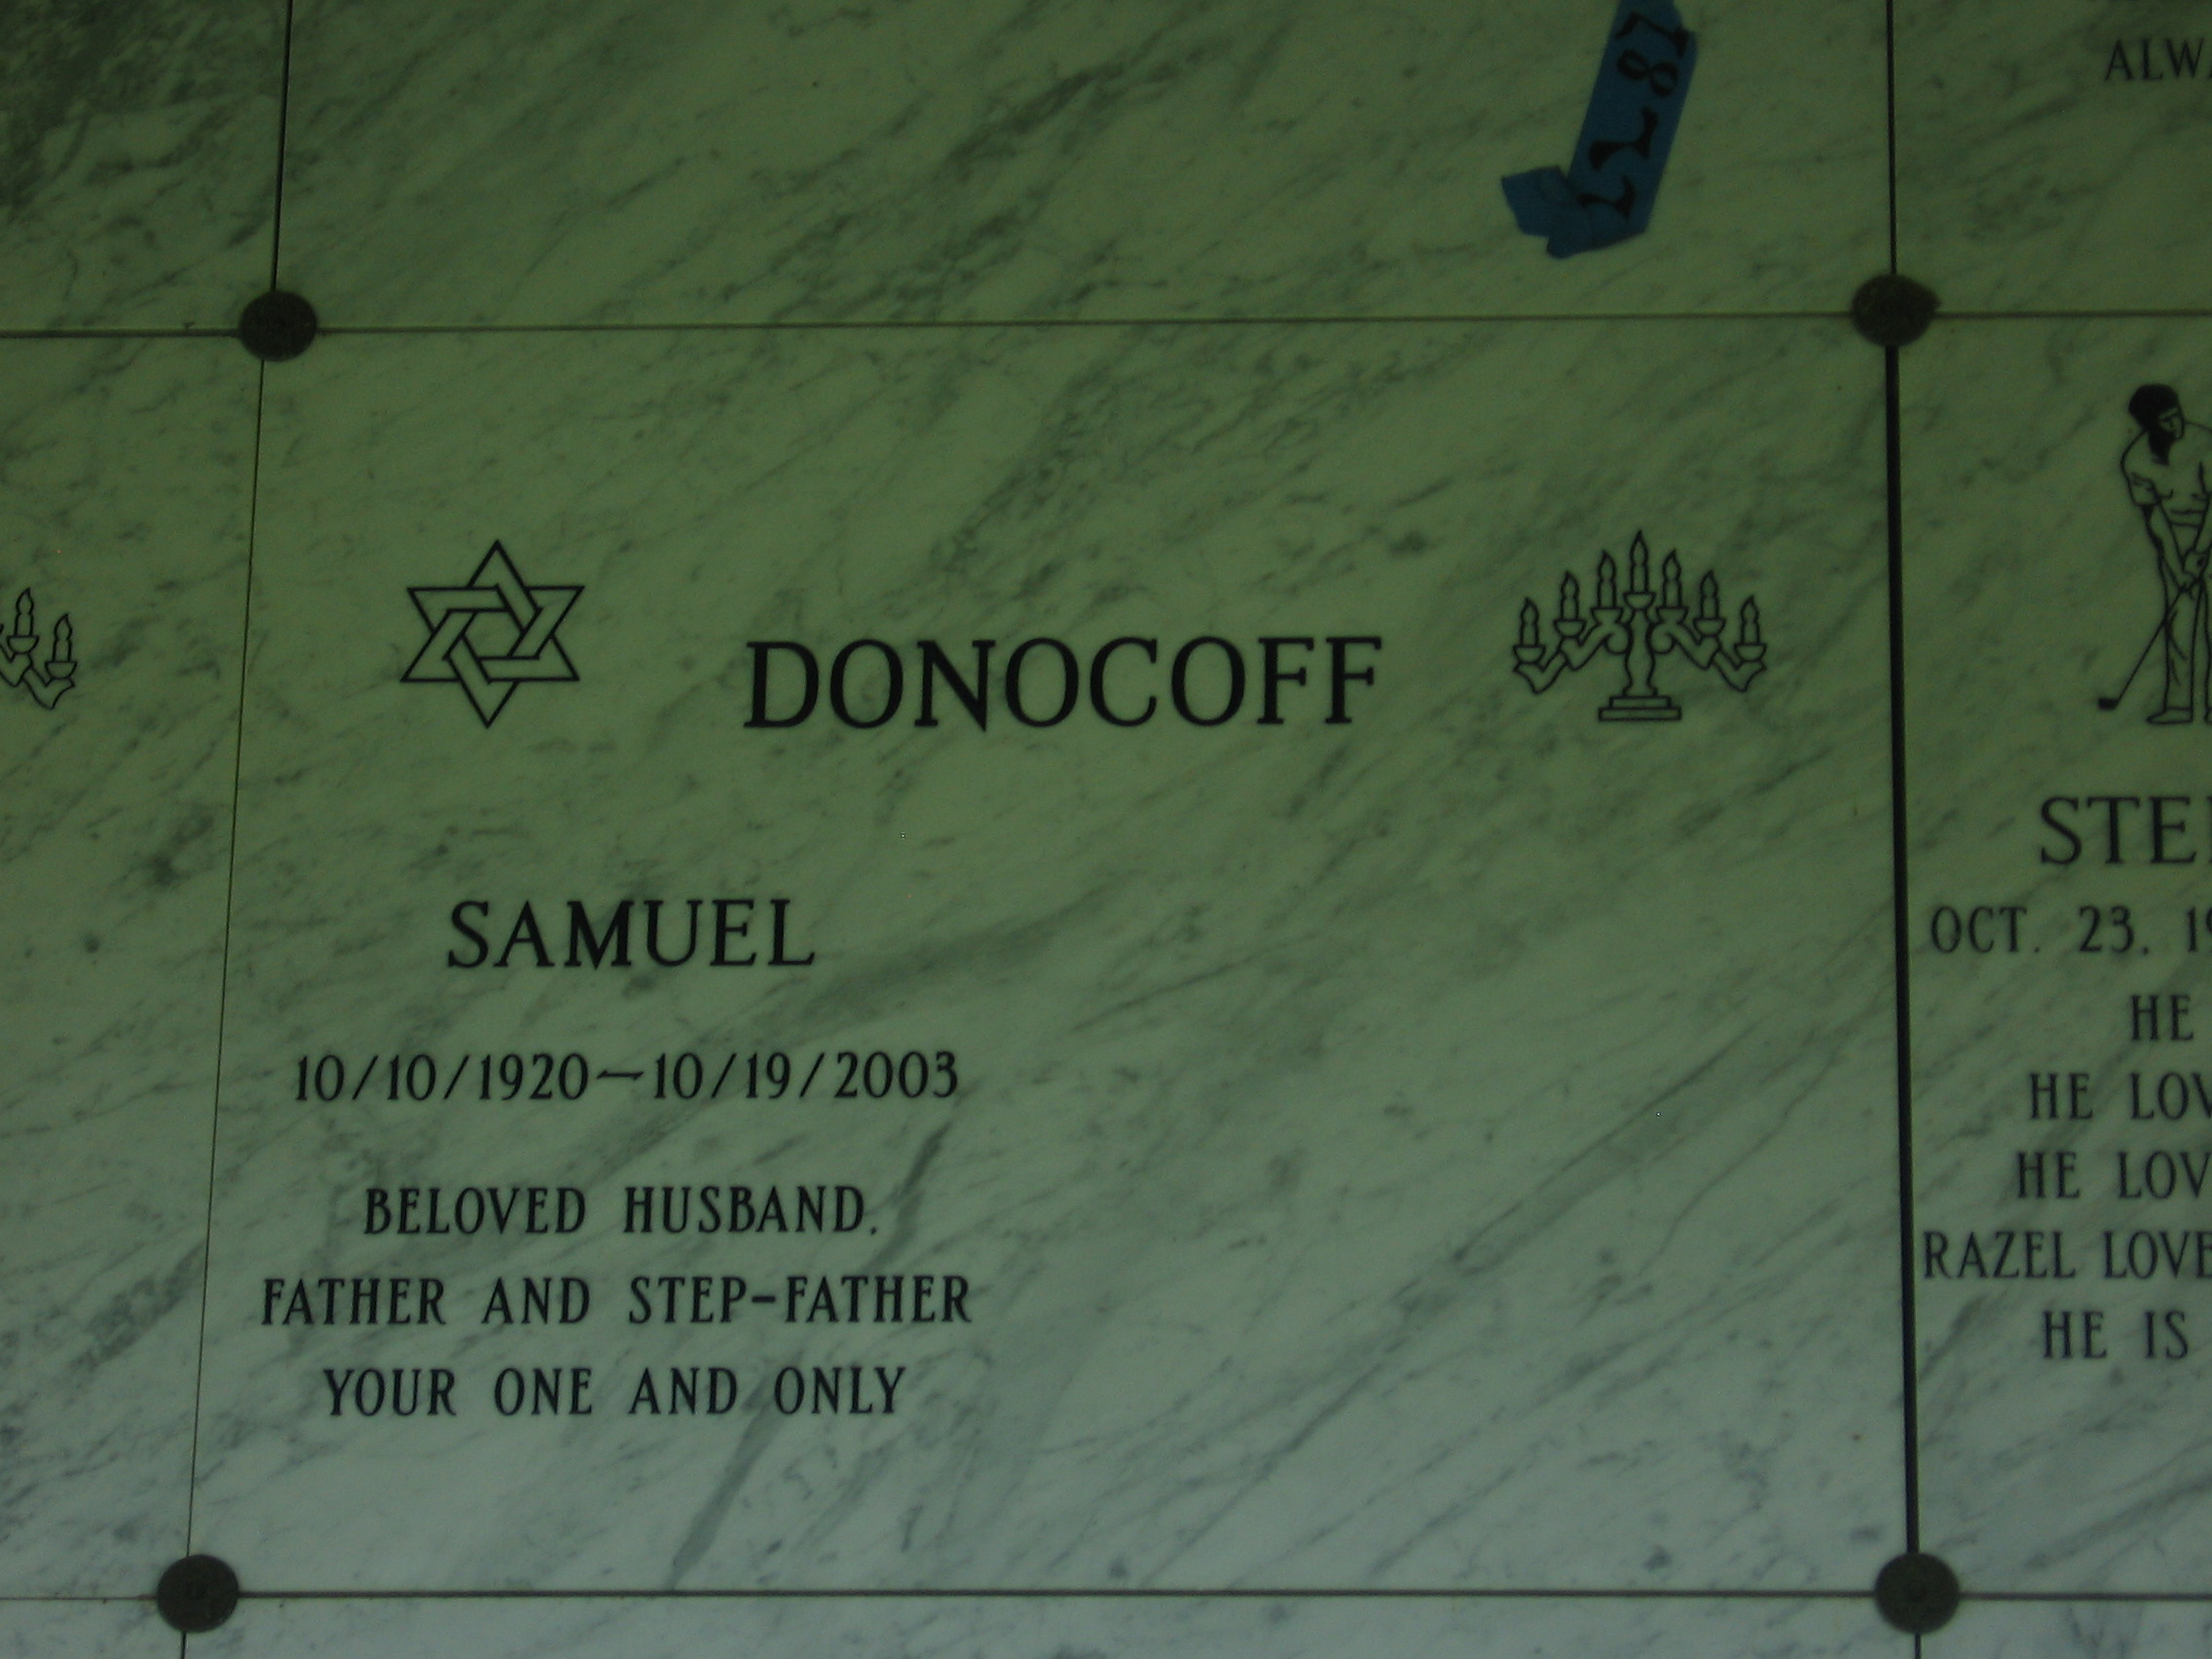 Samuel Donocoff